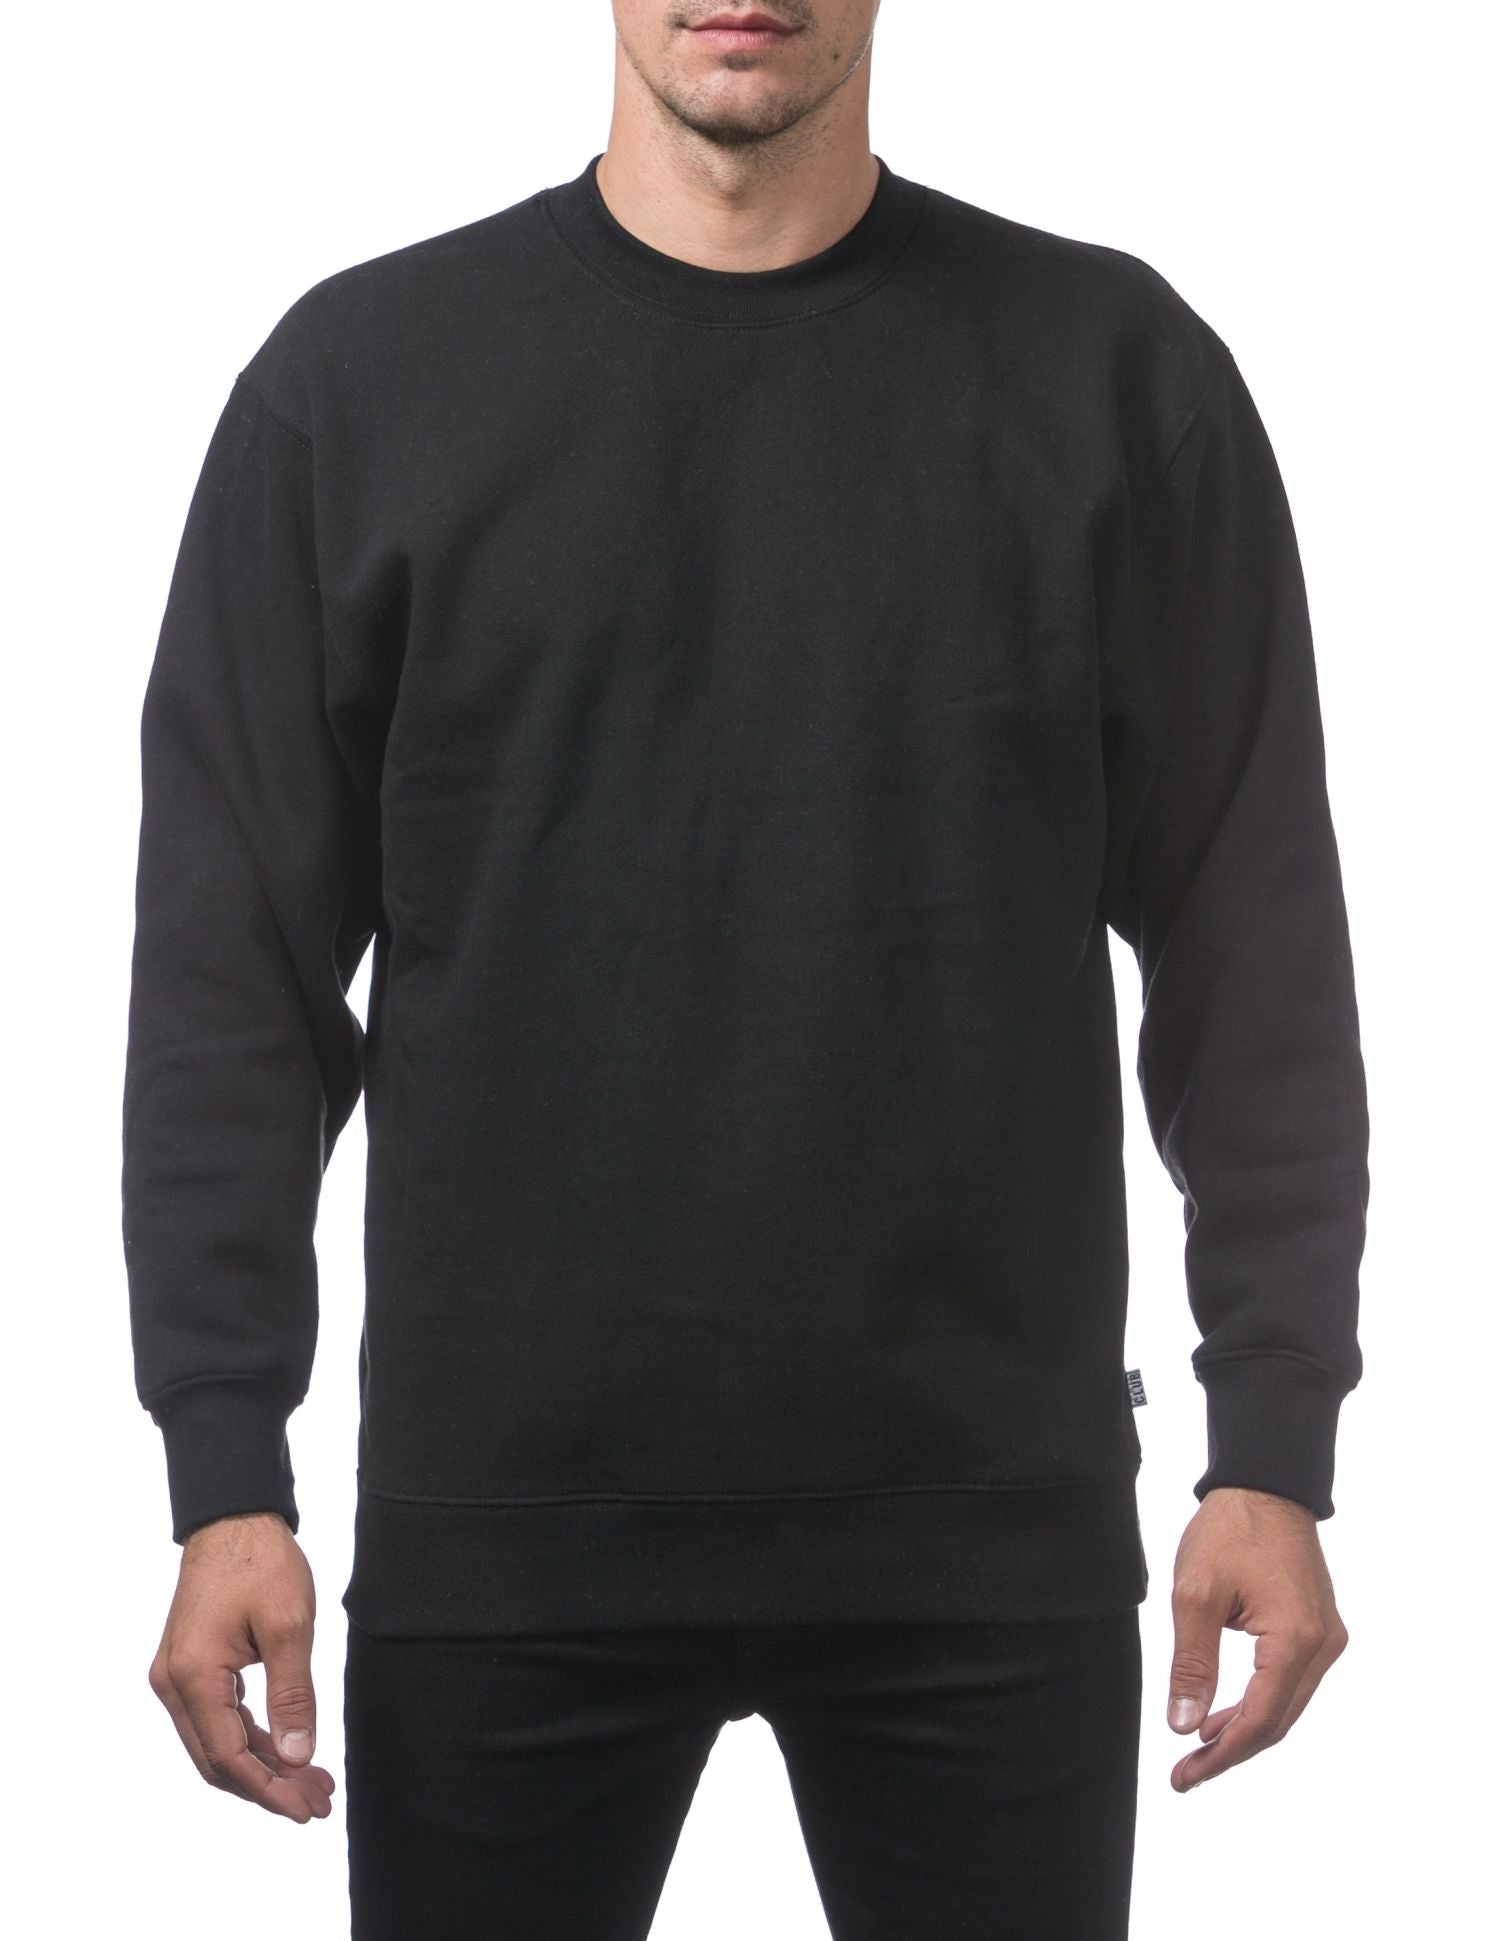 Pro Club Men's Plain Blank Crew Neck Fleece Pullover Sweater